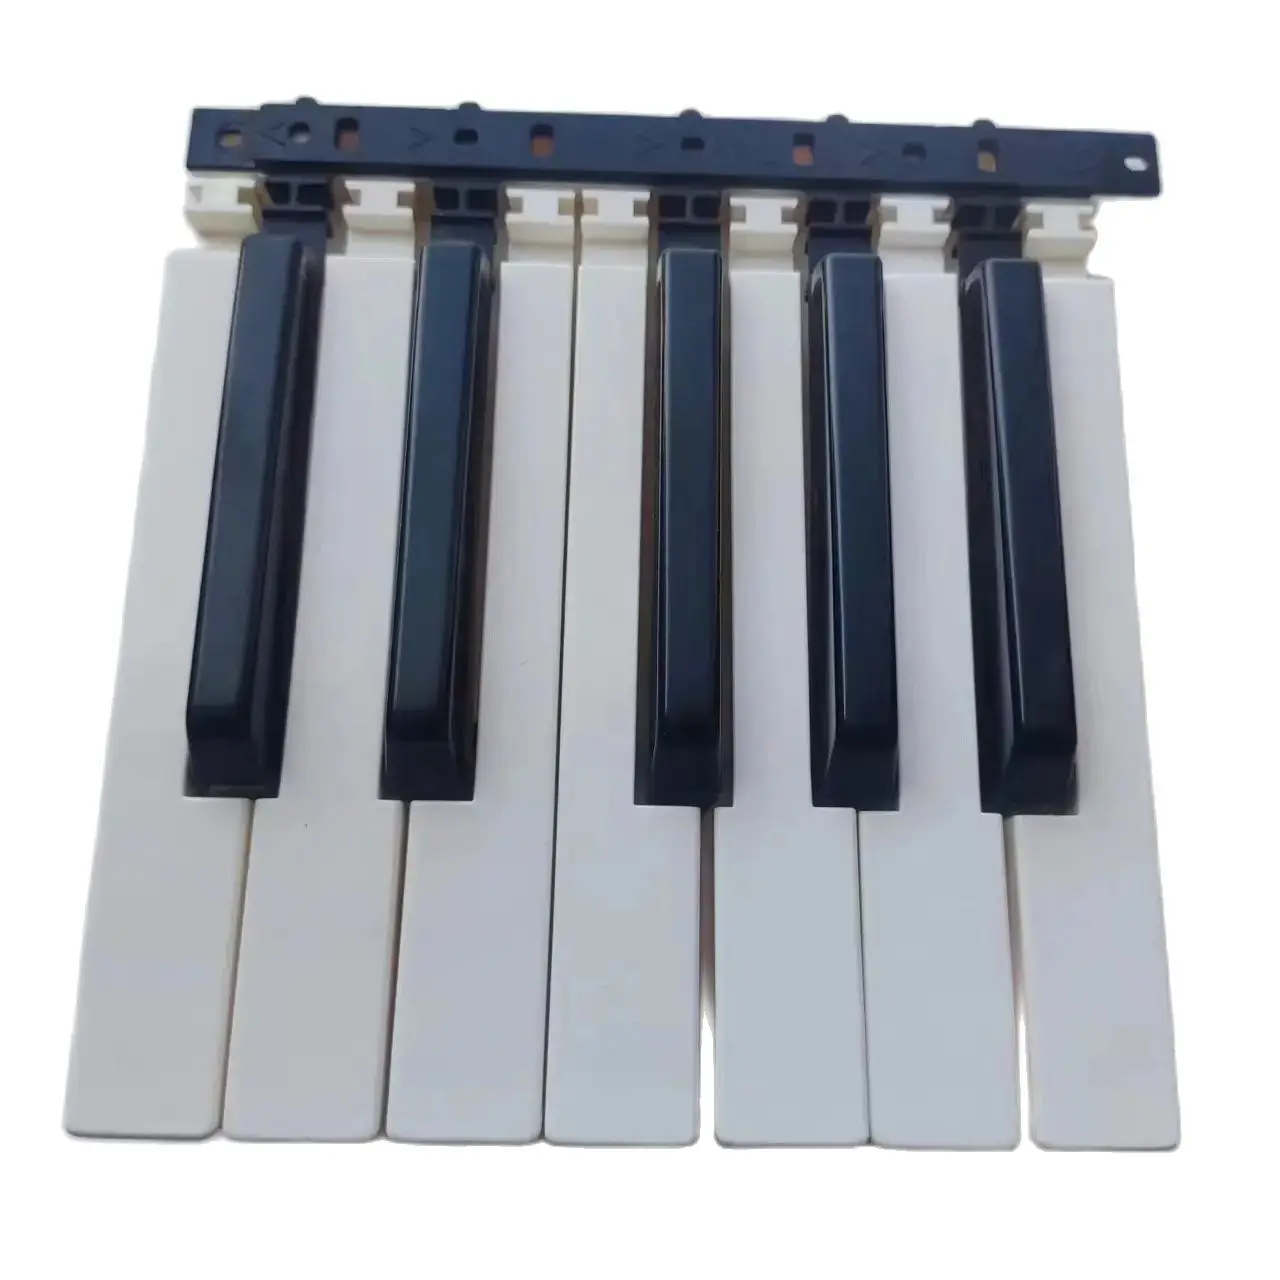 

For Yamaha PSR-1000 PSR-1100 1500 2000 2100 2500 PSR-3000 3500 4500 A1000 A2000 Replacement White Keys Keyboard Parts